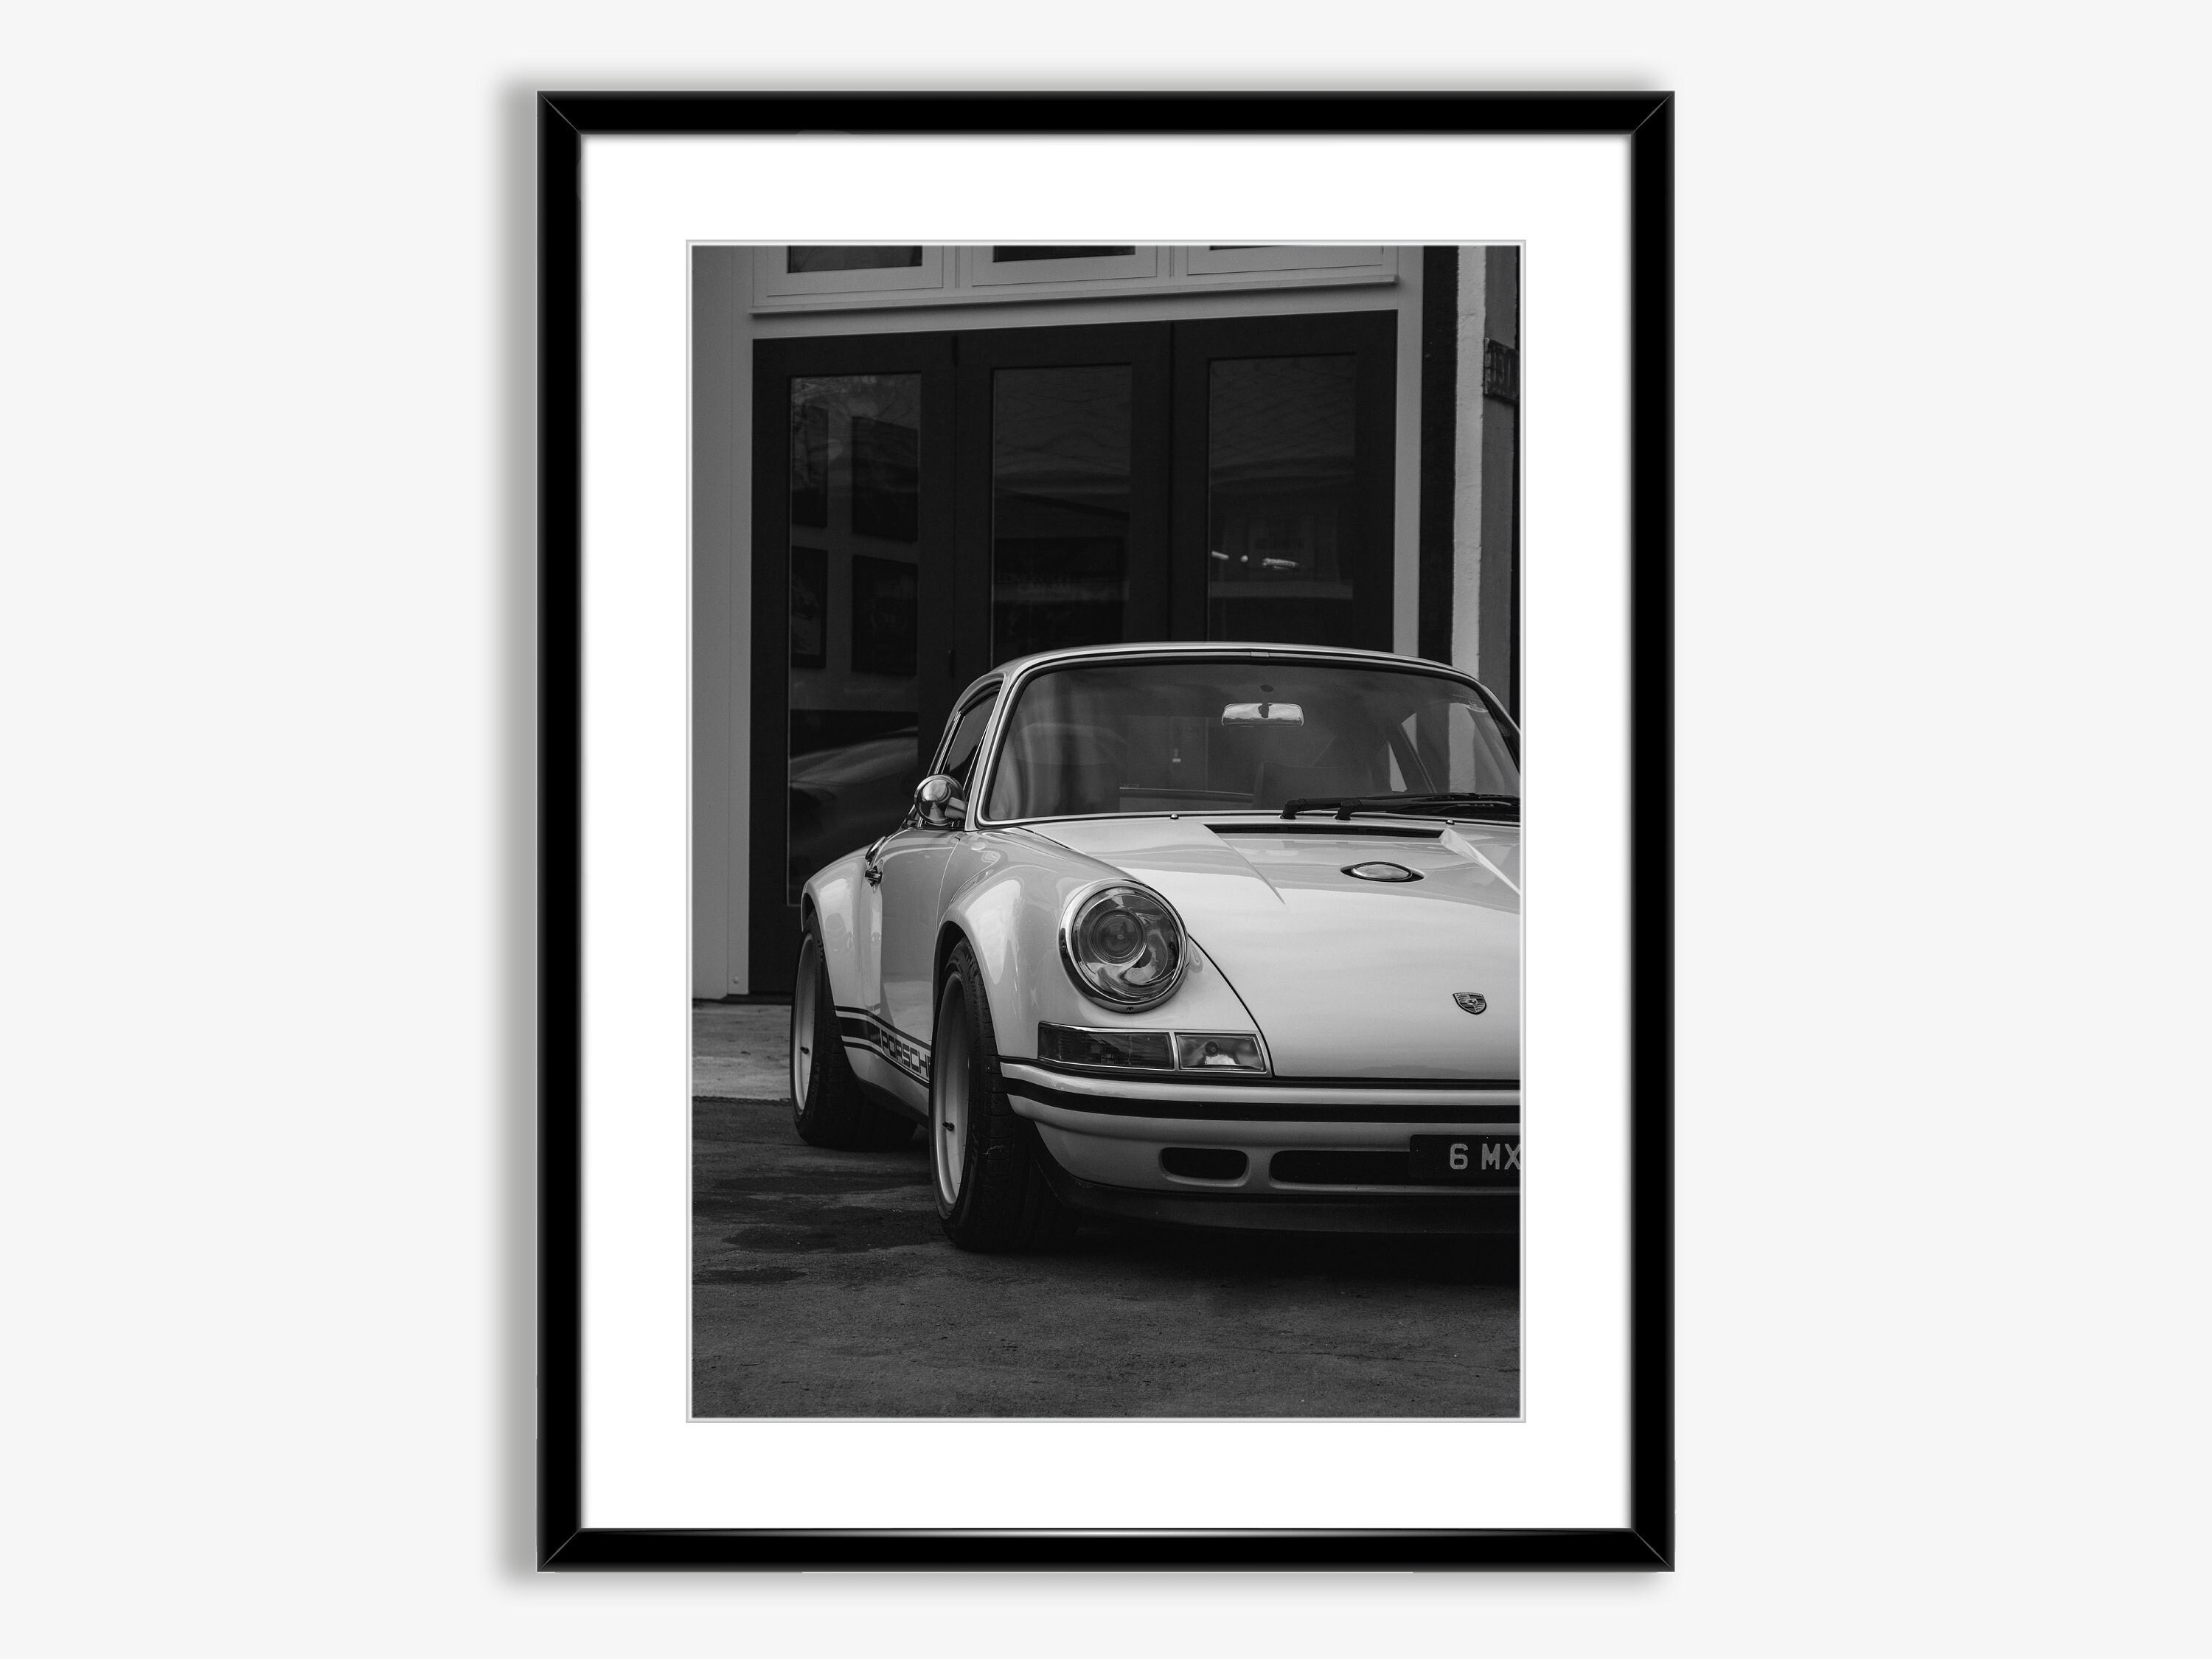 Buy Porsche Old Poster Online In India -  India